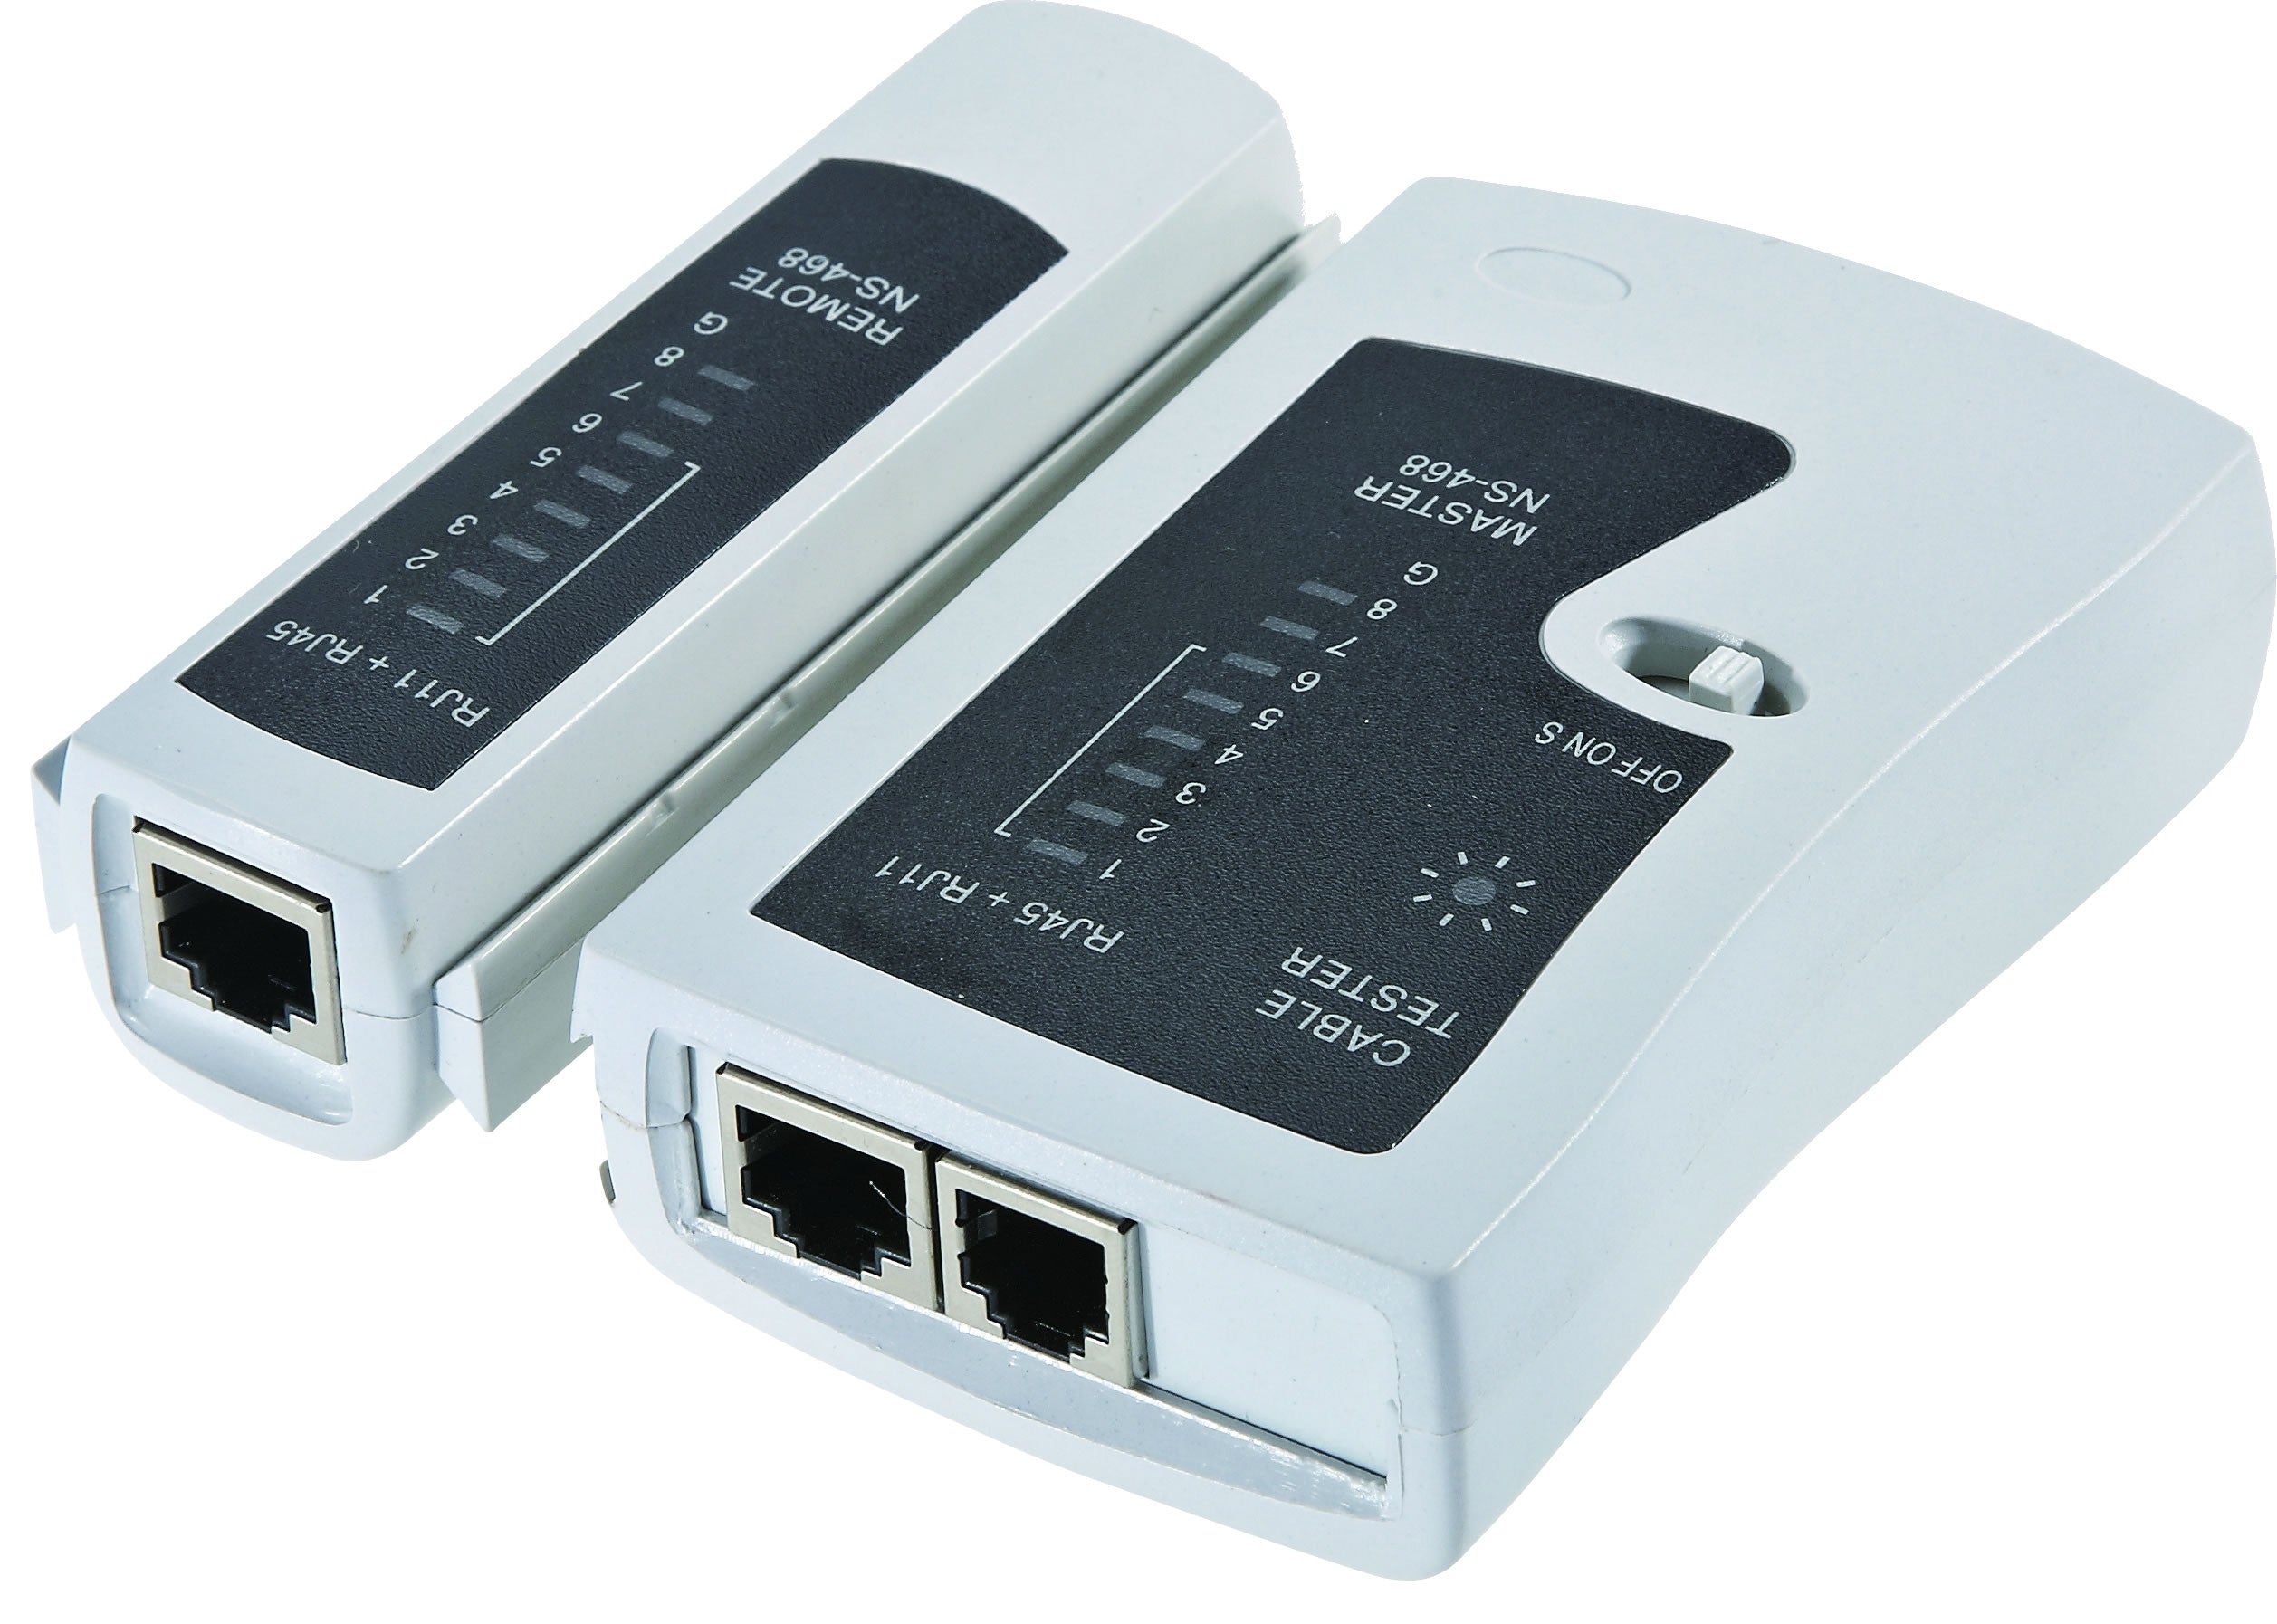 50-4871 Network Cable Tester for RJ11 / RJ12 / RJ45